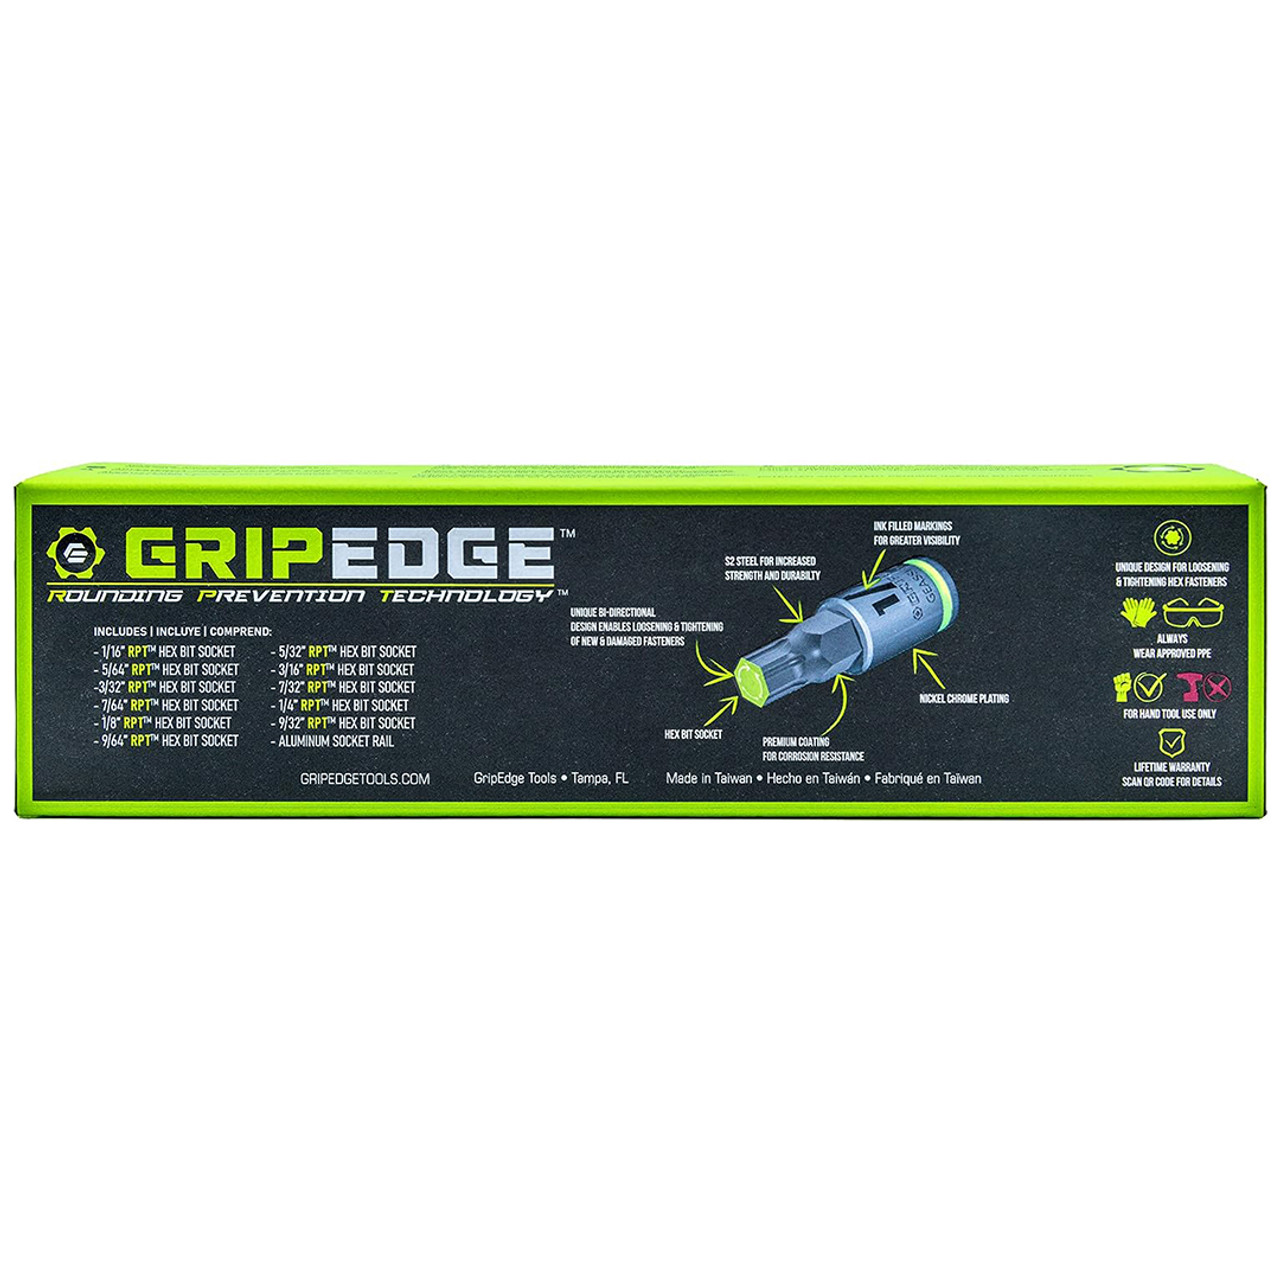 Gripedge GE11ASSHSRPT 1/4 Drive SAE RPT Hex Driver Set - 11-Pieces